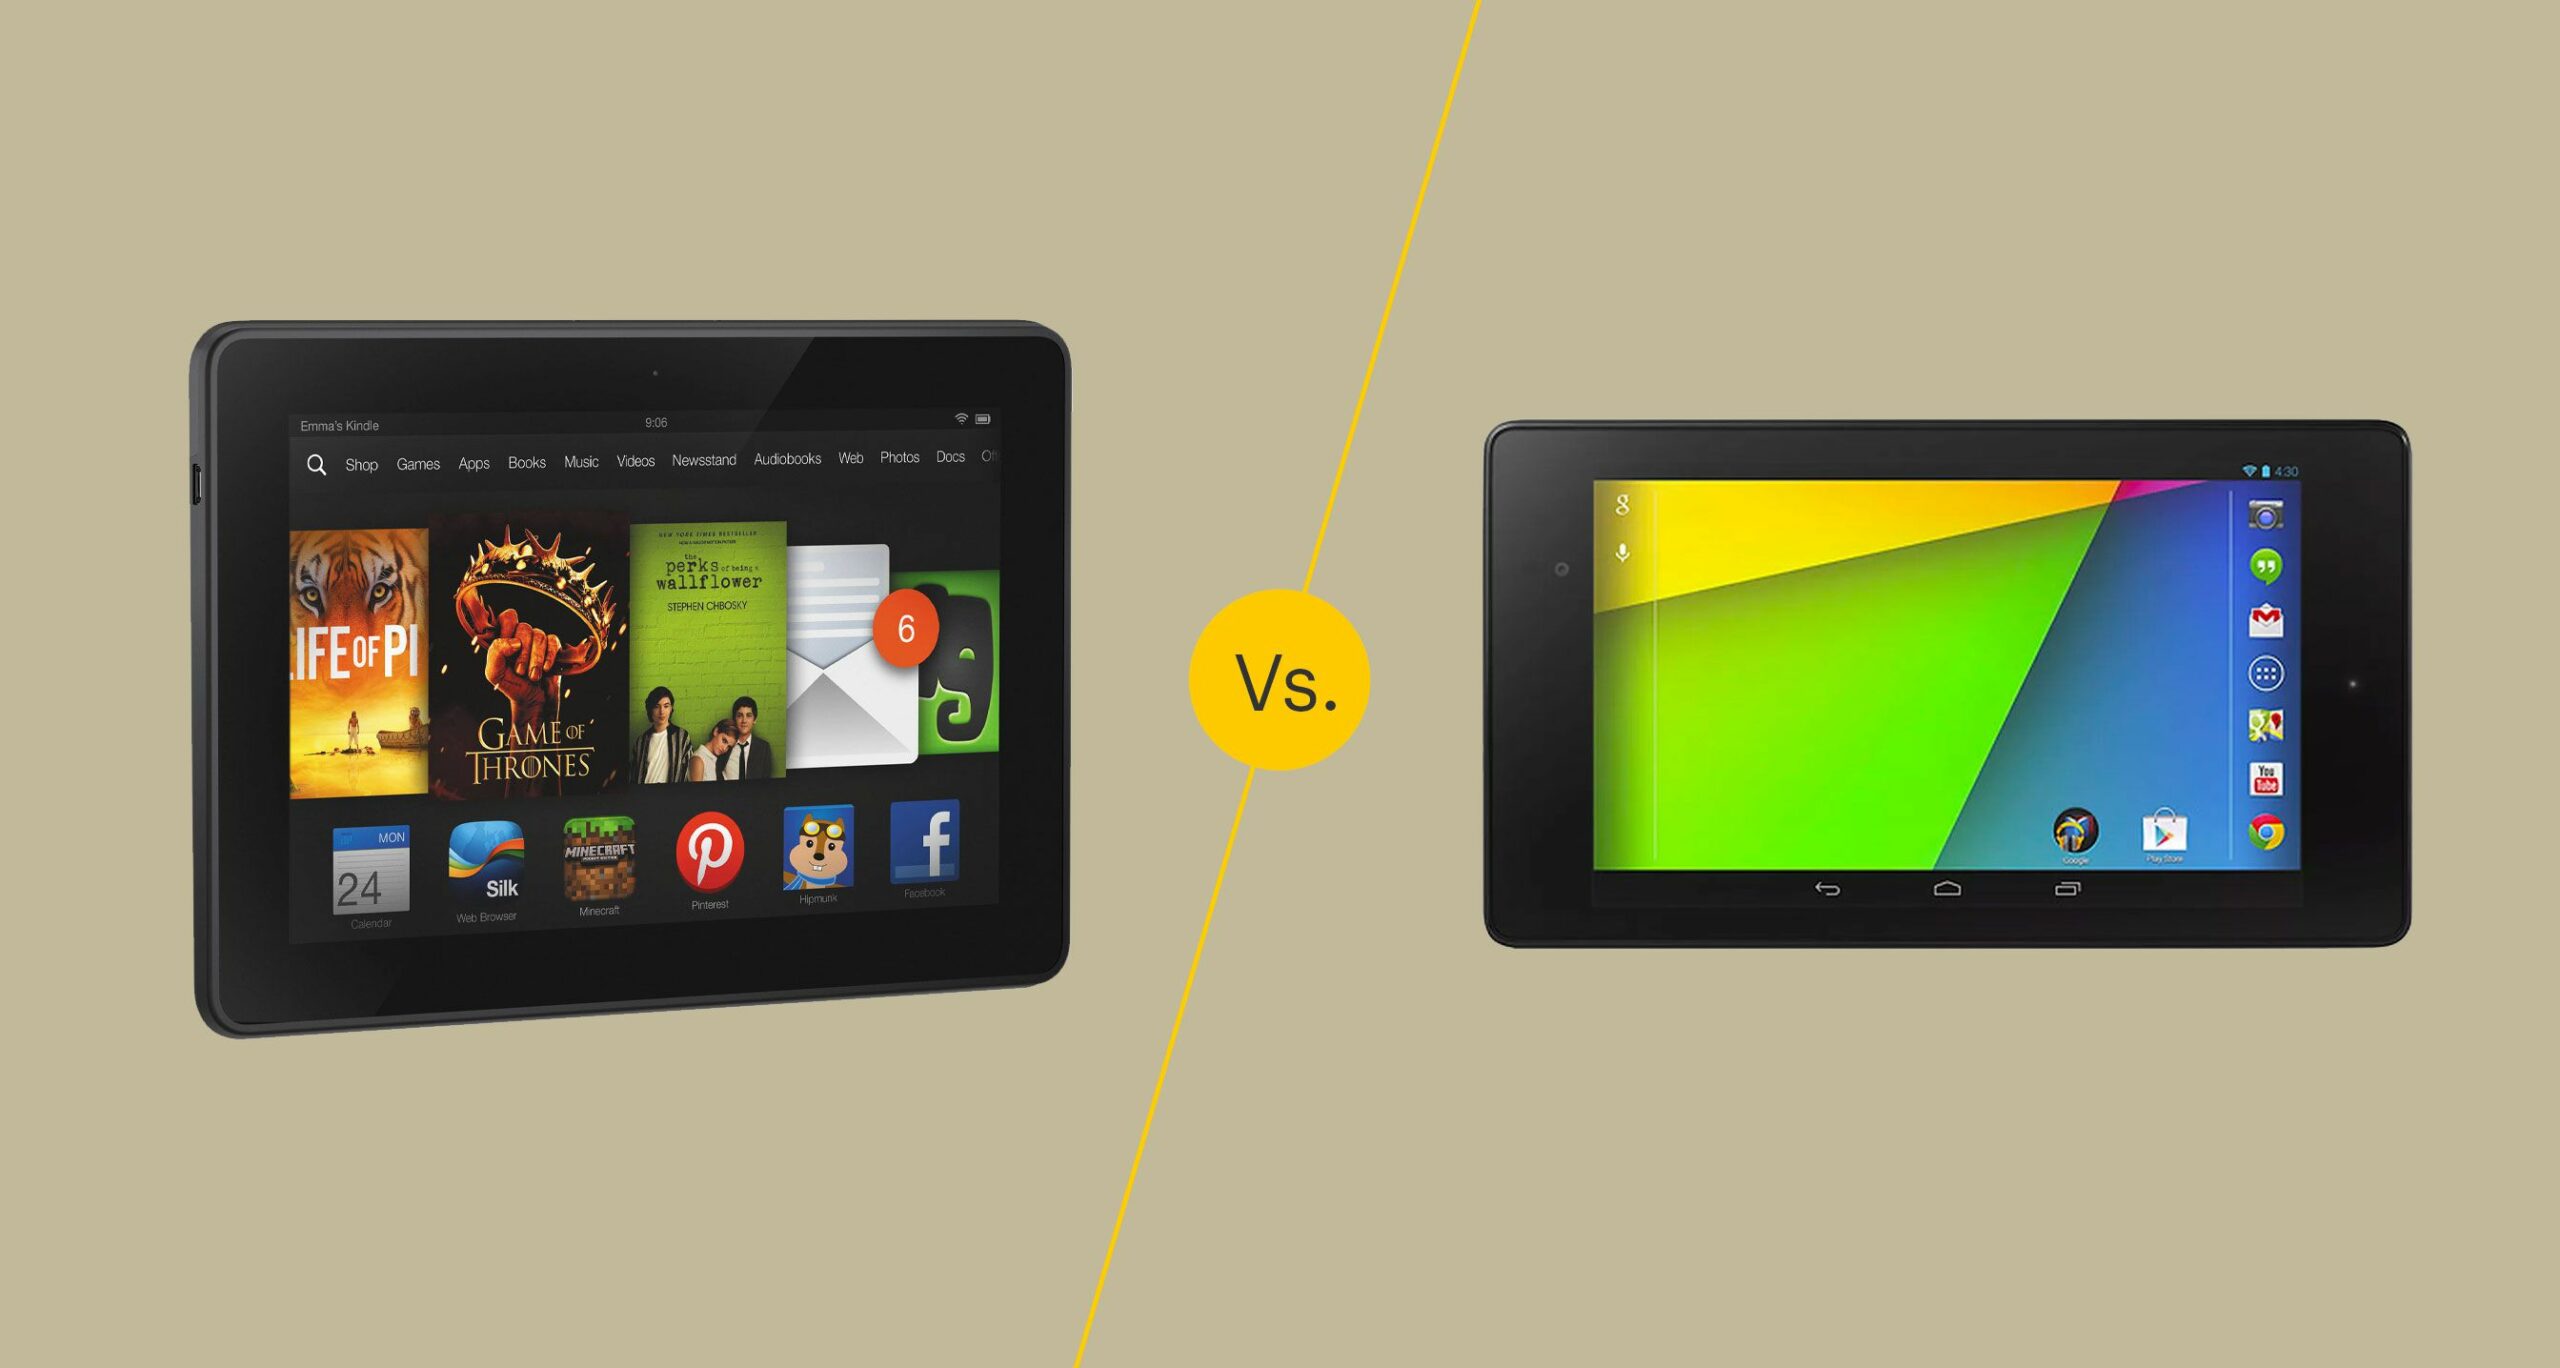 Kindle Fire HDX 7 vs Nexus 7 5fe90801796849fdaeb9a8bc1980c9d5 scaled